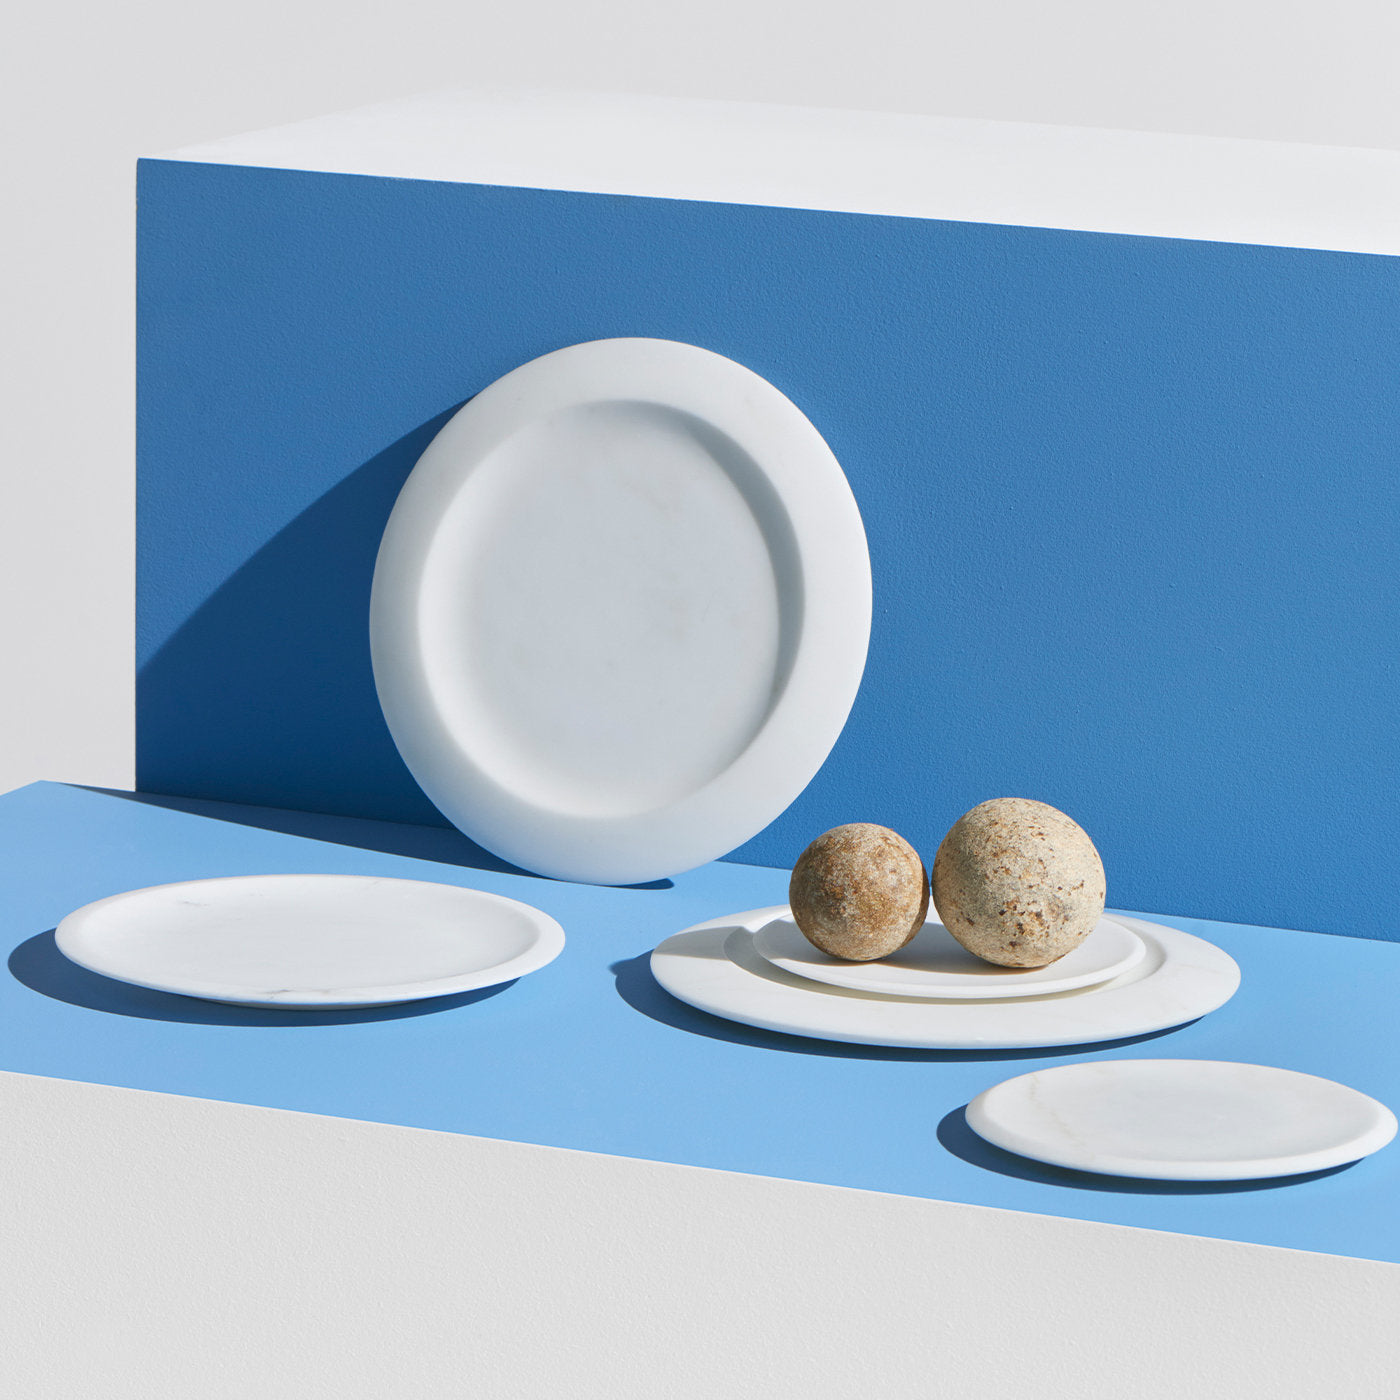 White Michelangelo Dinner Plate by Ivan Colominas - Alternative view 2